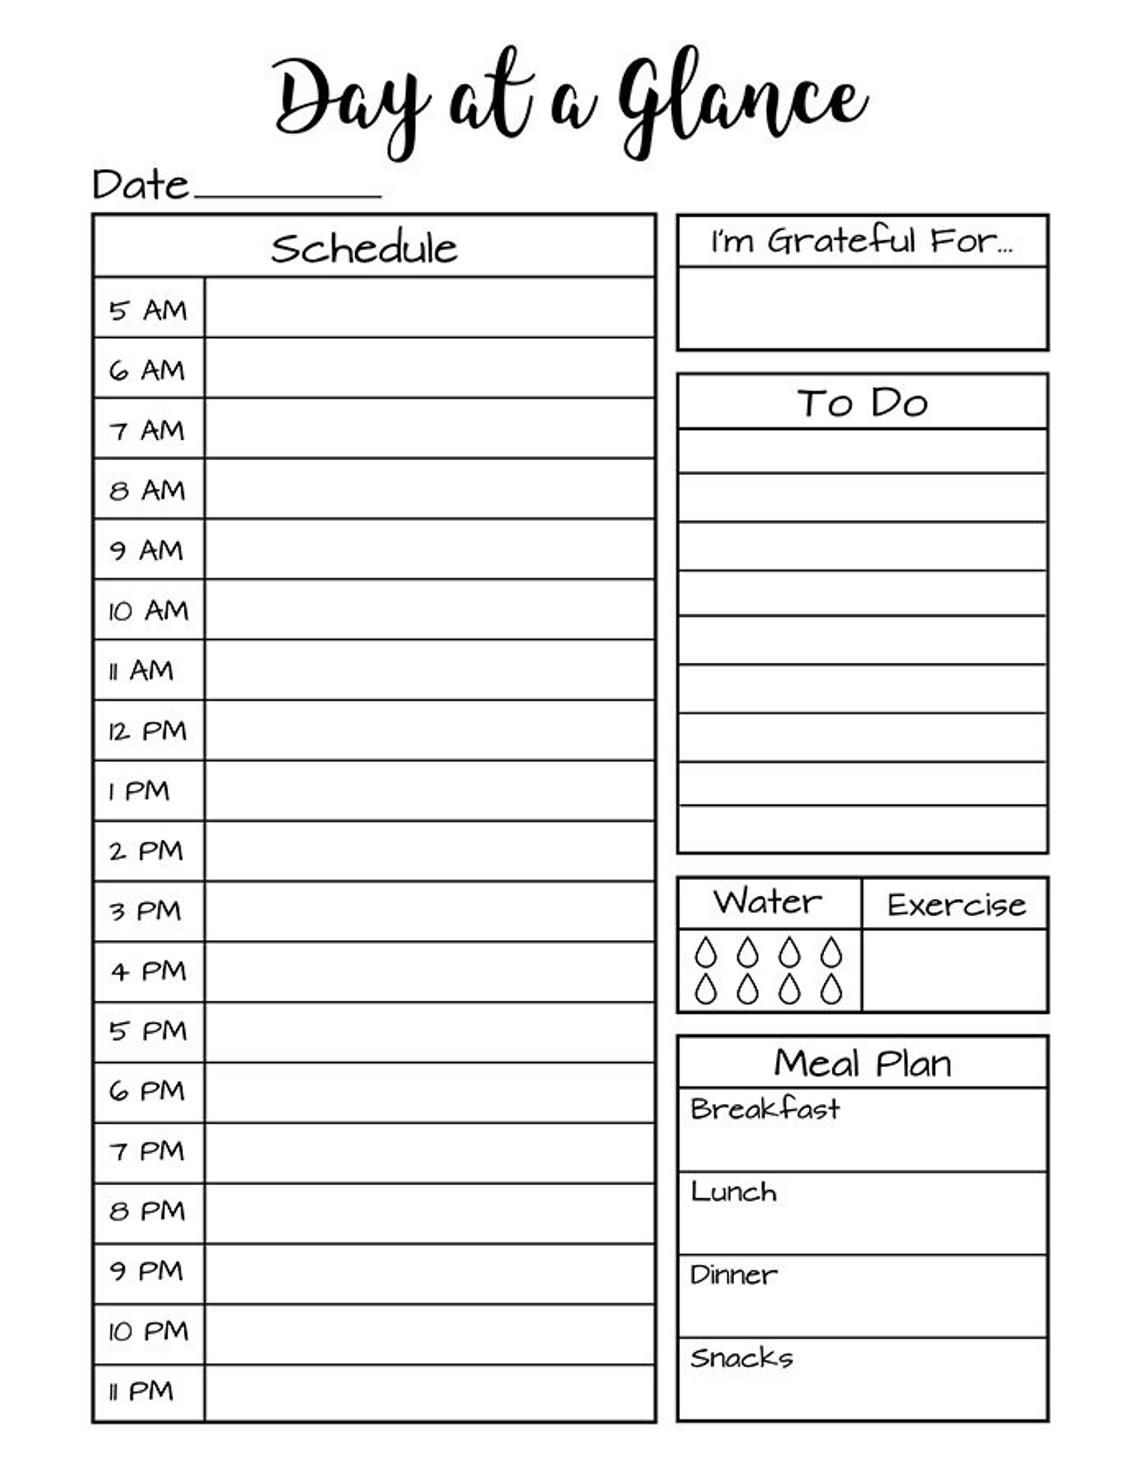 Schedule At A Glance Template - Calendar Inspiration Design